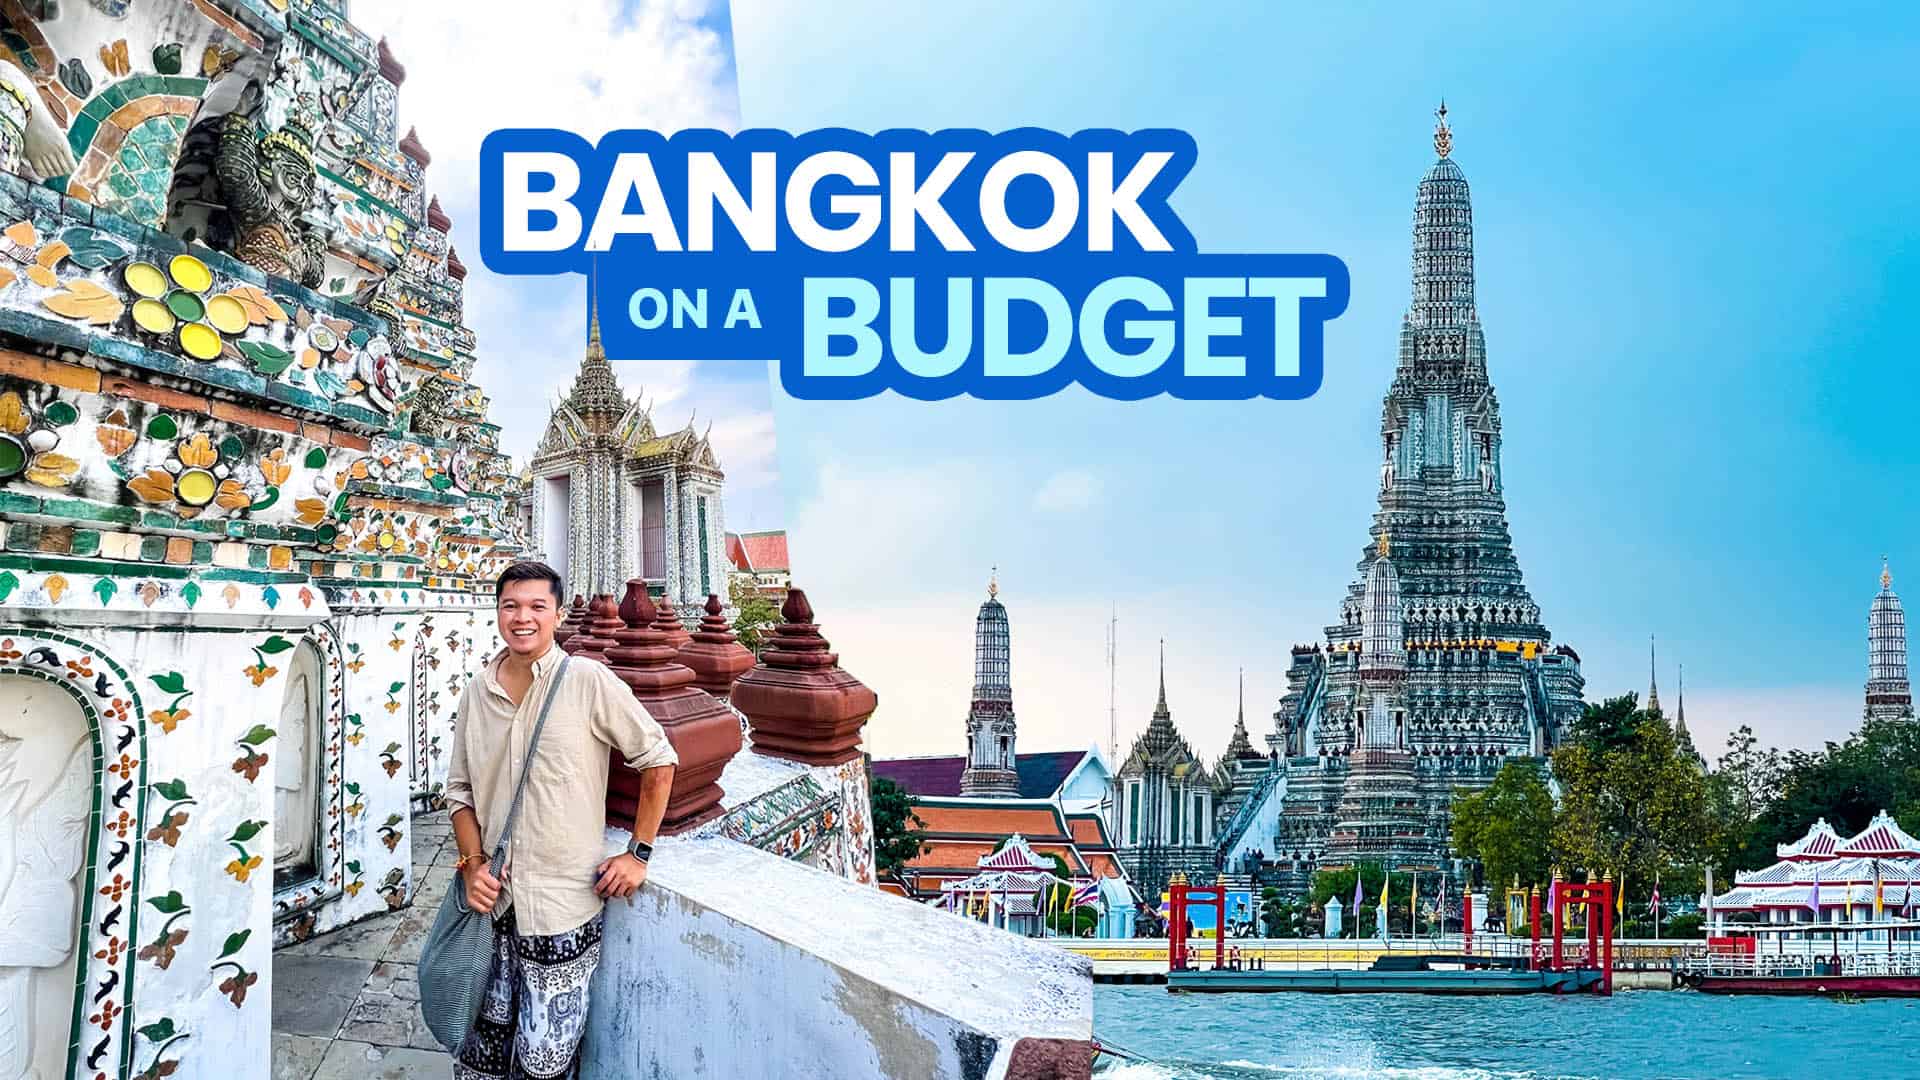 Dream World Bangkok , 6 reasons to visit & enjoy the ultimate